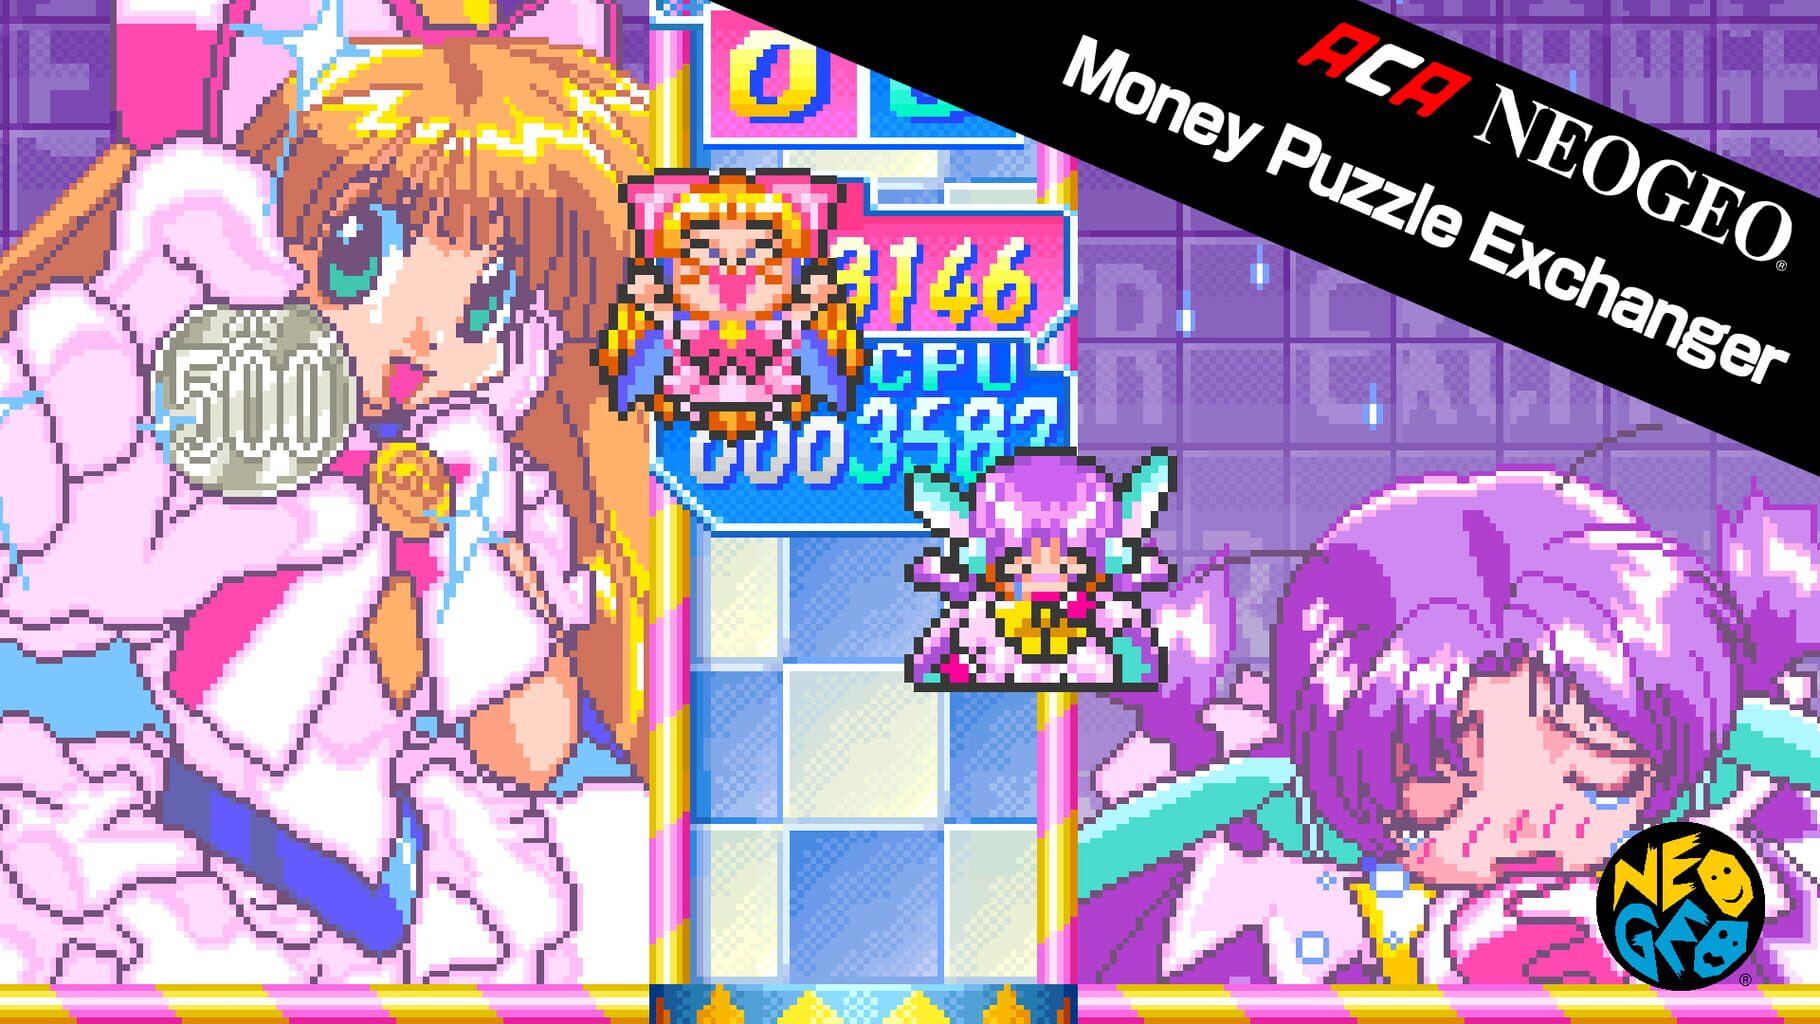 ACA Neo Geo: Money Puzzle Exchanger artwork